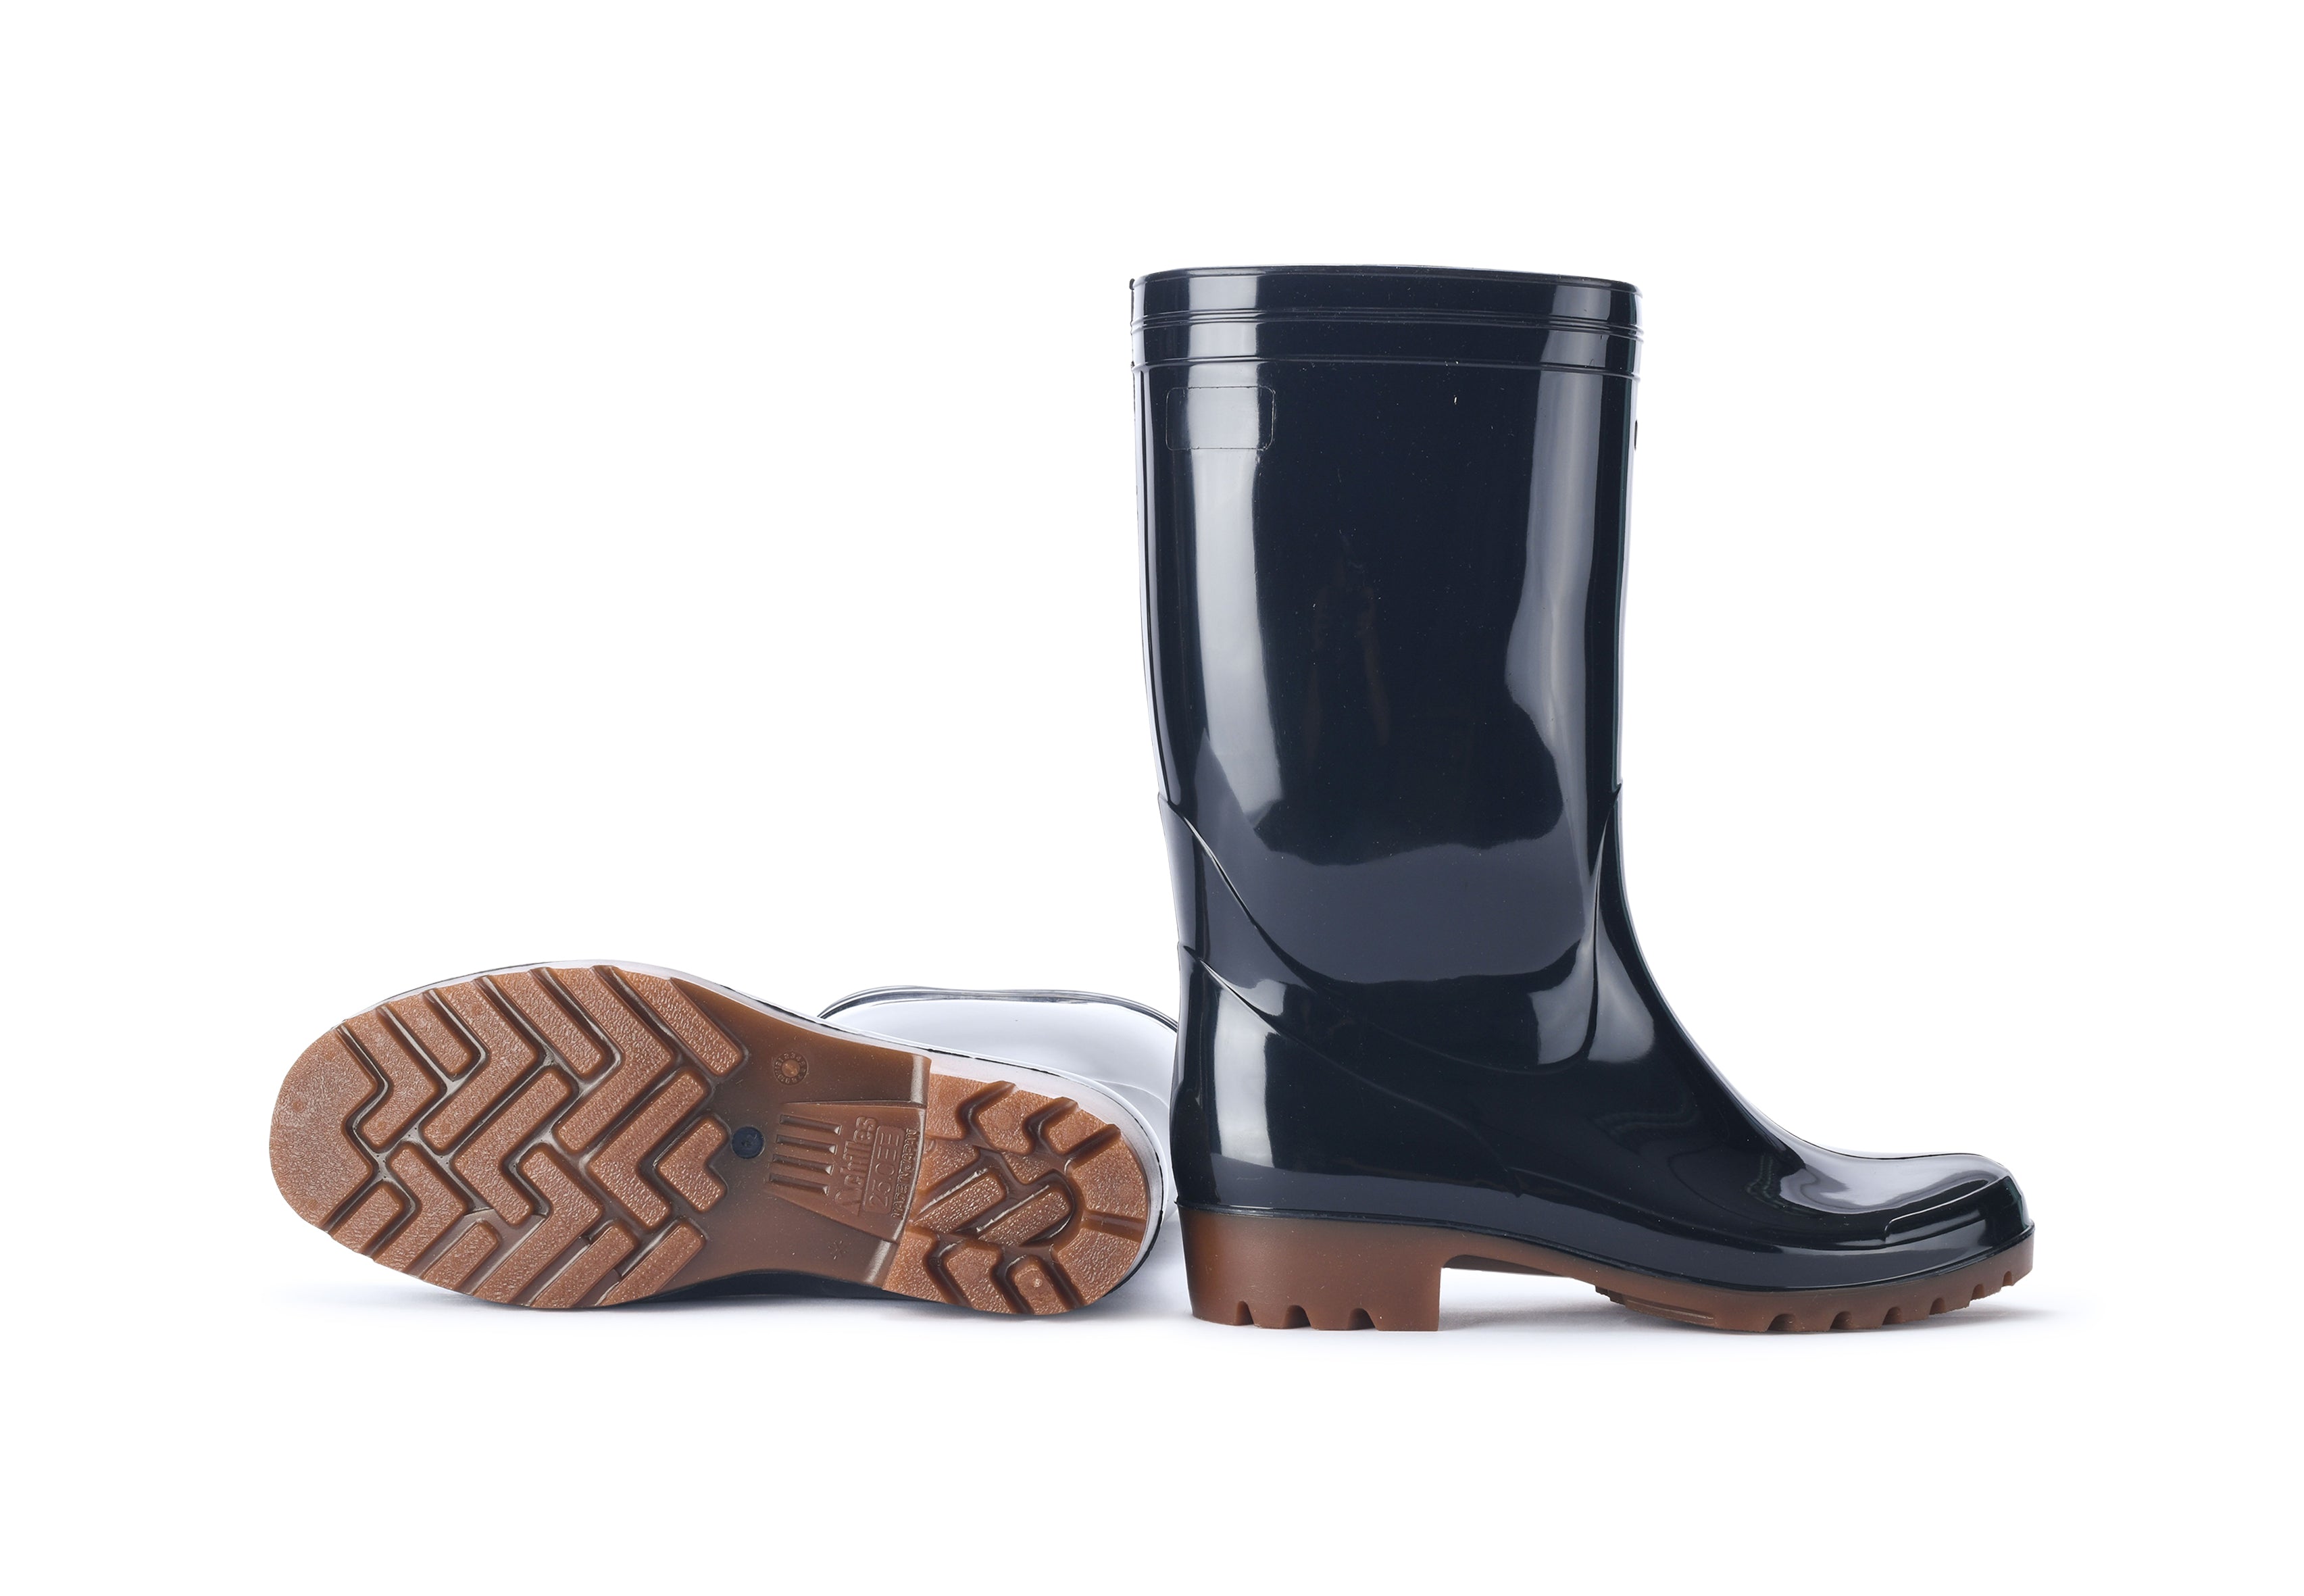 Labor Rain Boots 30cm (Japan Made)-Achilles-BK-JP/TW Size-1: 230-偉豐鞋 WELL SHOE HK-Well Shoe-偉豐鞋-偉豐網-荃灣鞋店-Functional shoes-Hong Kong Tsuen Wan Shoe Store-Tai Wan Shoe-Japan Shoe-高品質功能鞋-台灣進口鞋-日本進口鞋-High-quality shoes-鞋類配件-荃灣進口鞋-香港鞋店-優質鞋類產品-水靴-帆布鞋-廚師鞋-香港鞋品牌-Hong Kong Shoes brand-長者鞋-Hong Kong Rain Boots-Kitchen shoes-Cruthes-Slipper-Well Shoe Hong Kong-Anello-Arriba-休閒鞋-舒適鞋-健康鞋-皮鞋-Healthy shoes-Leather shoes-Hiking shoes